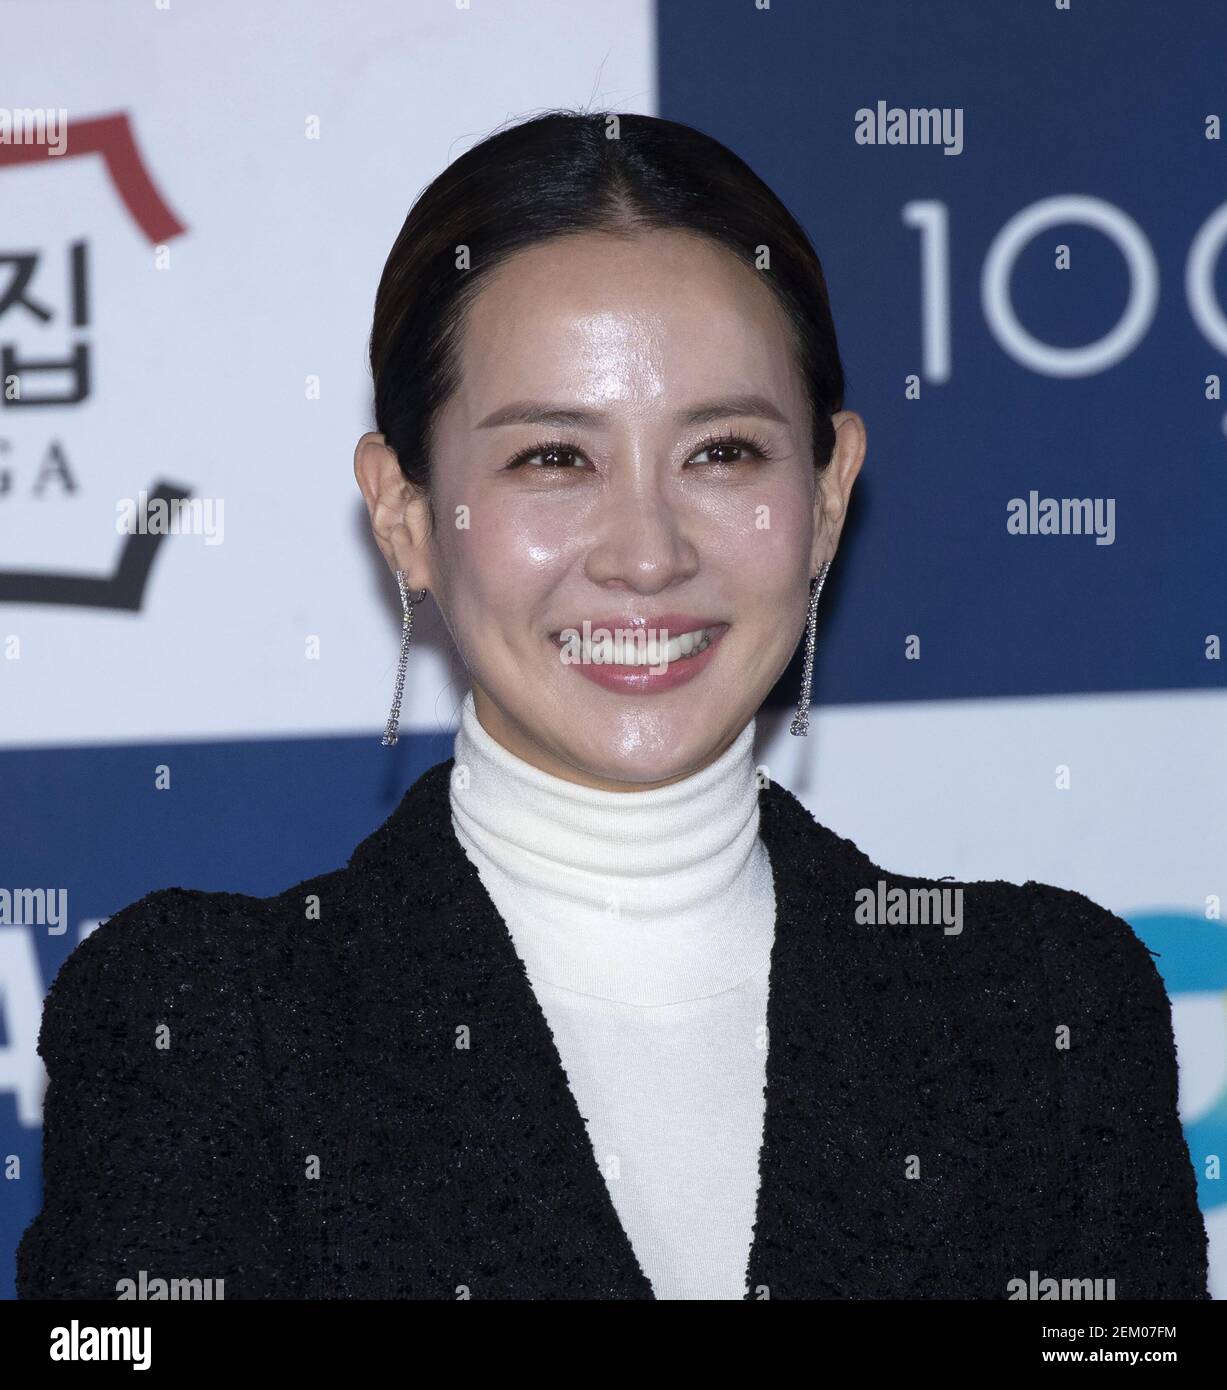 12 November 2020 - Seoul, South Korea : South Korean actress Cho Yeo-jeong, attend a hands printing event for the "41st Blue Dragon Film Awards" at CGV Cinema in Seoul, South Korea on November 12, 2020. (Photo by: Lee Young-ho/Sipa USA) Stock Photo